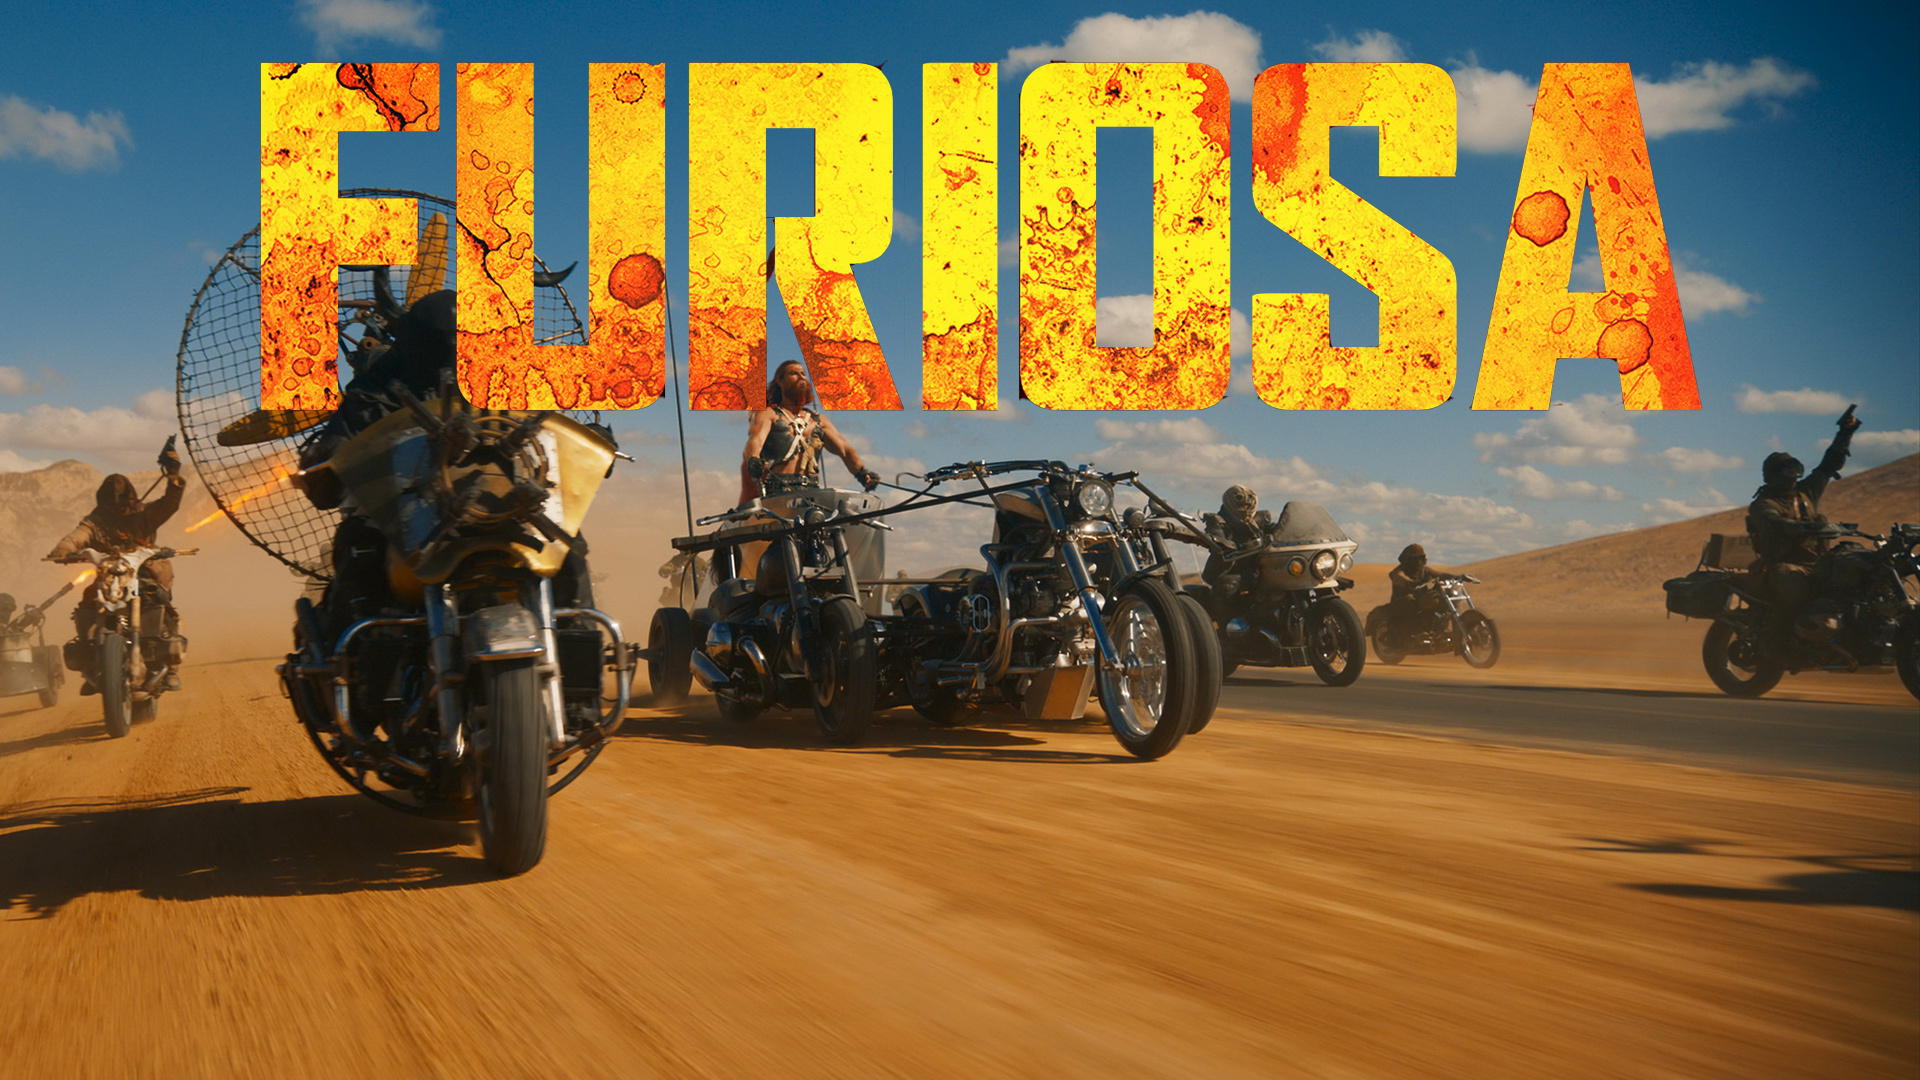 Furiosa A Mad Max Saga Revving Up For a PostApocalyptic Adventure